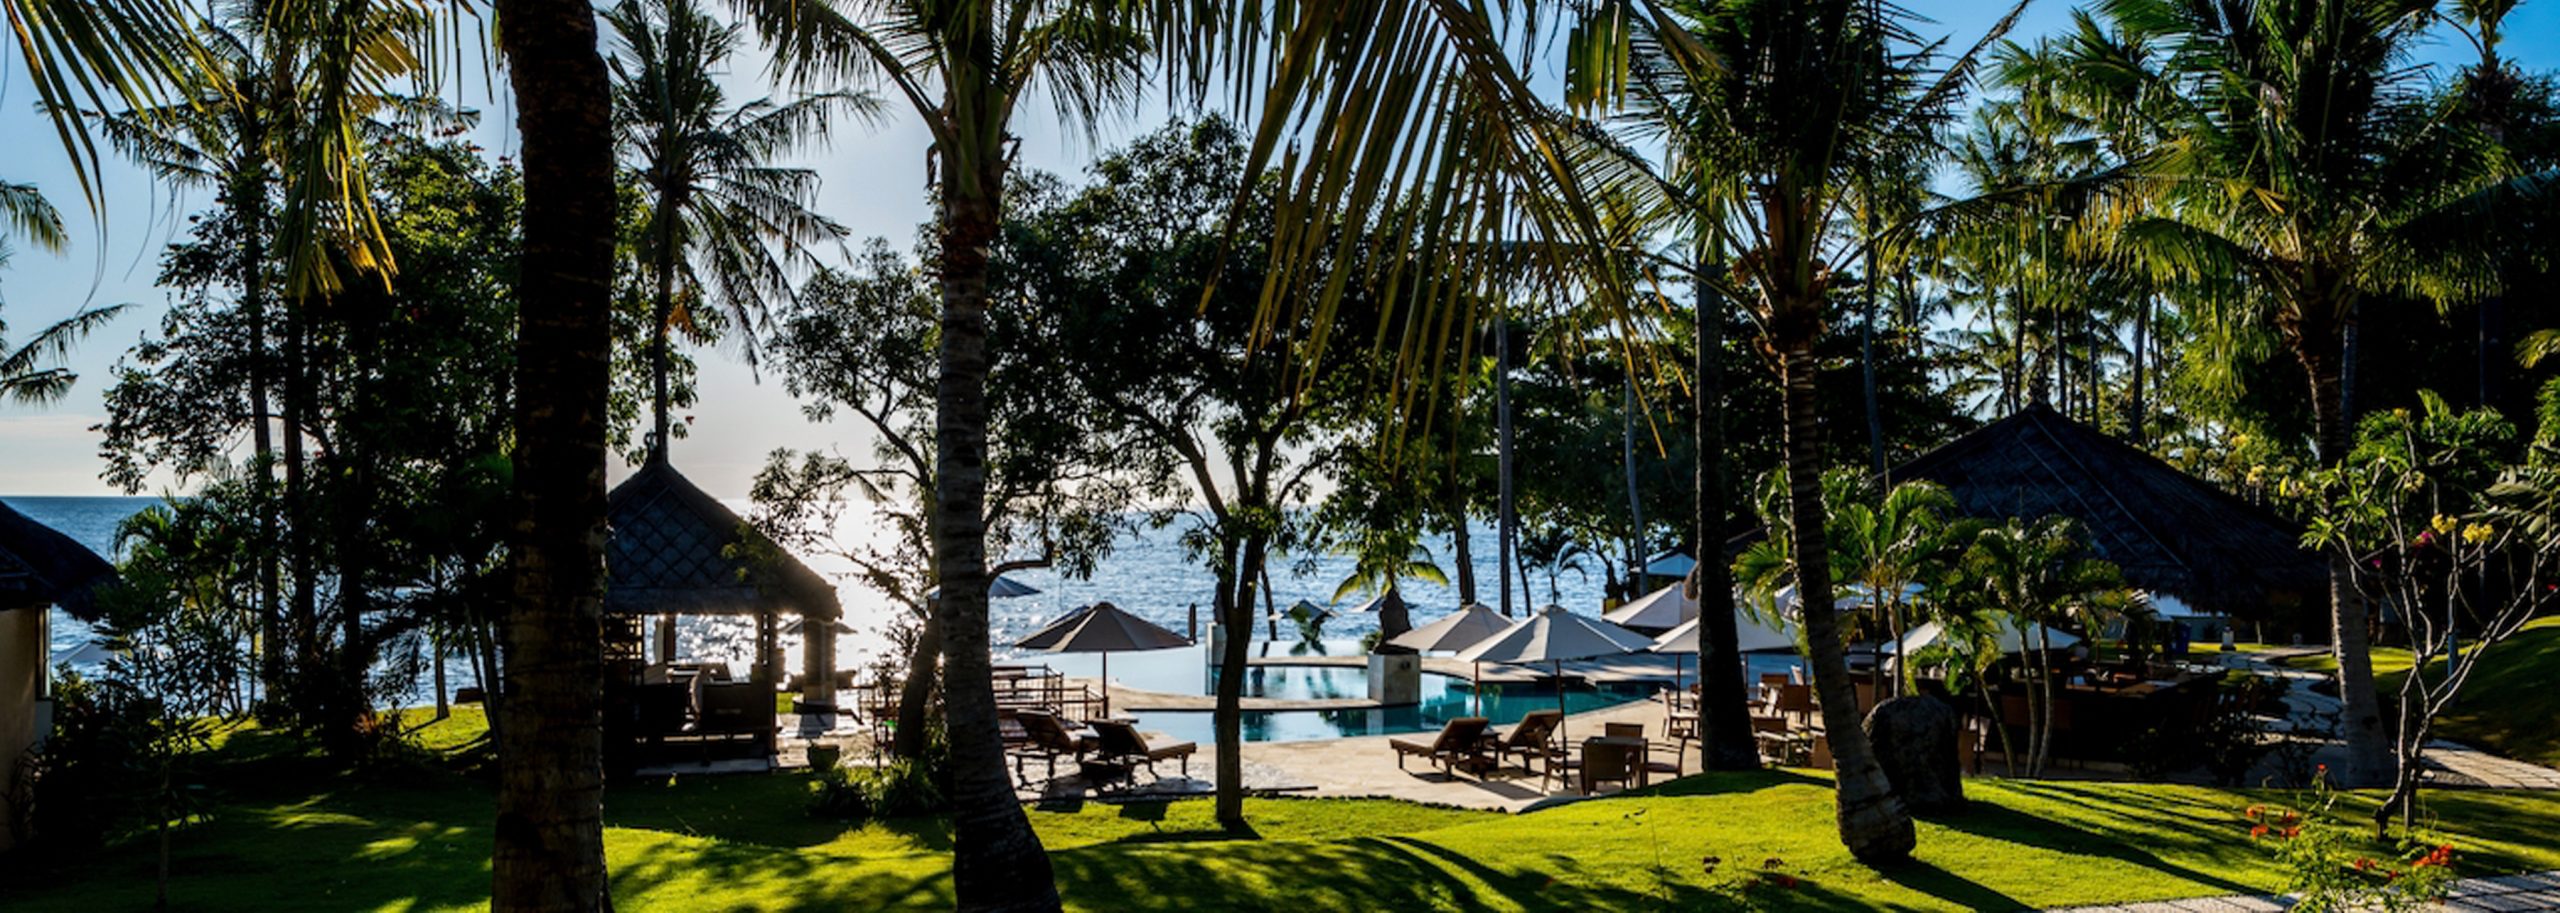 Siddhartha Oceanfront Resort & Spa Bali Indonesia